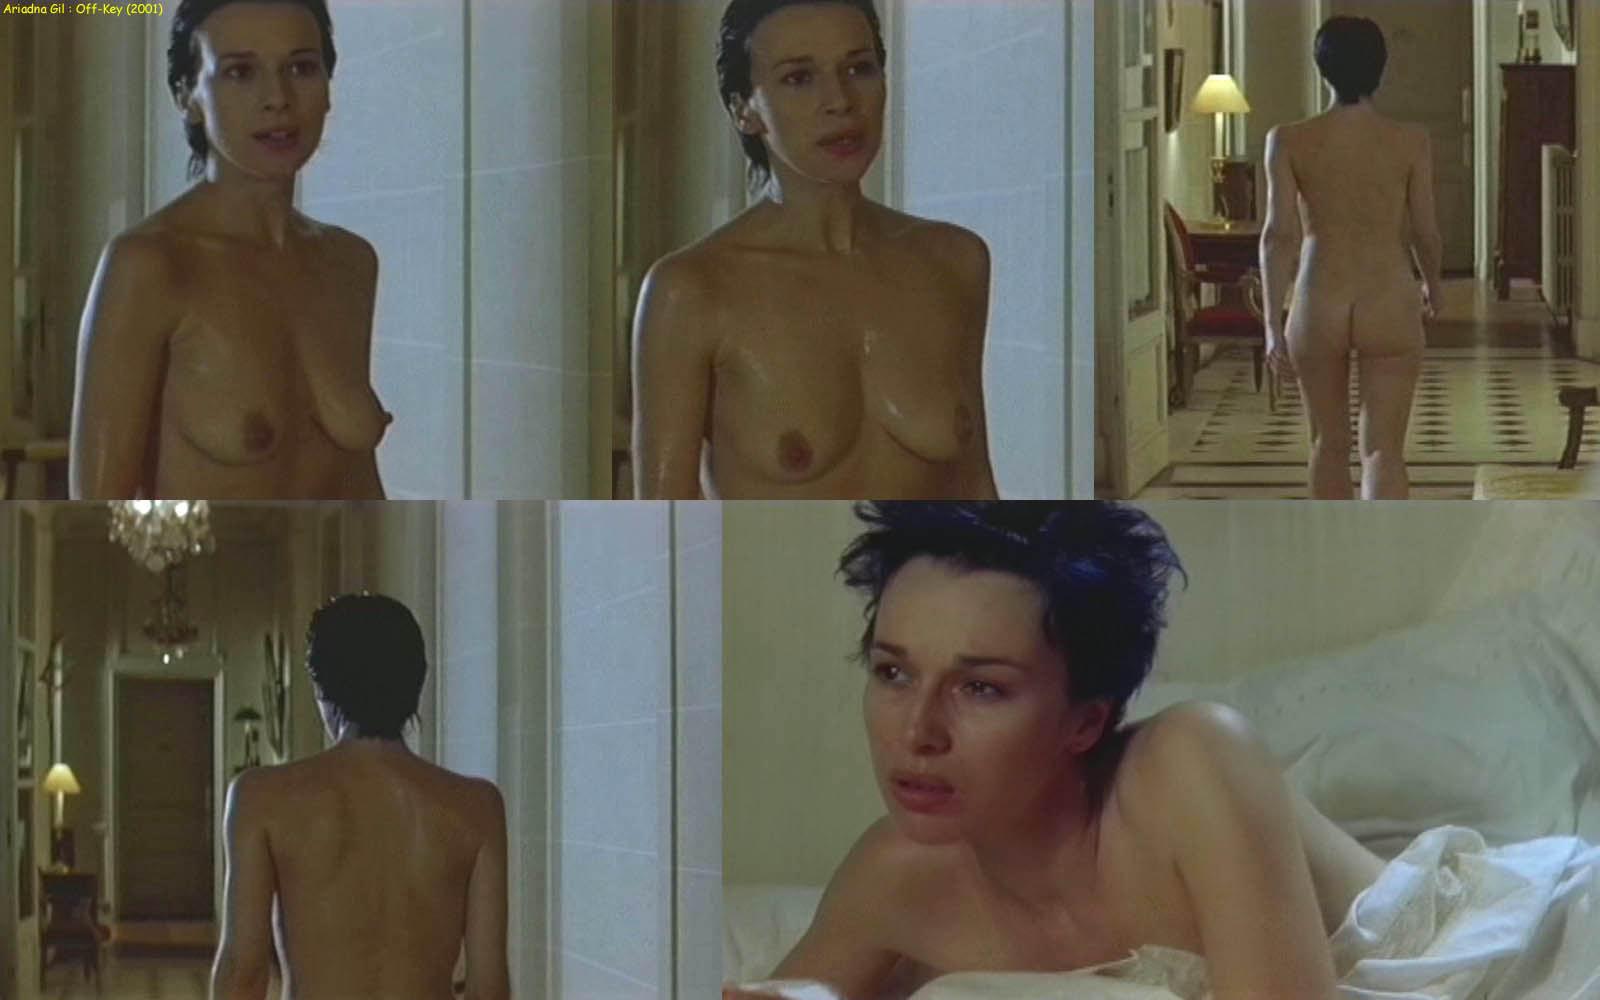 Ariadna cascales nude - 🧡 Ариадна Хиль голая - Наедине с тобою (2013) EroS...